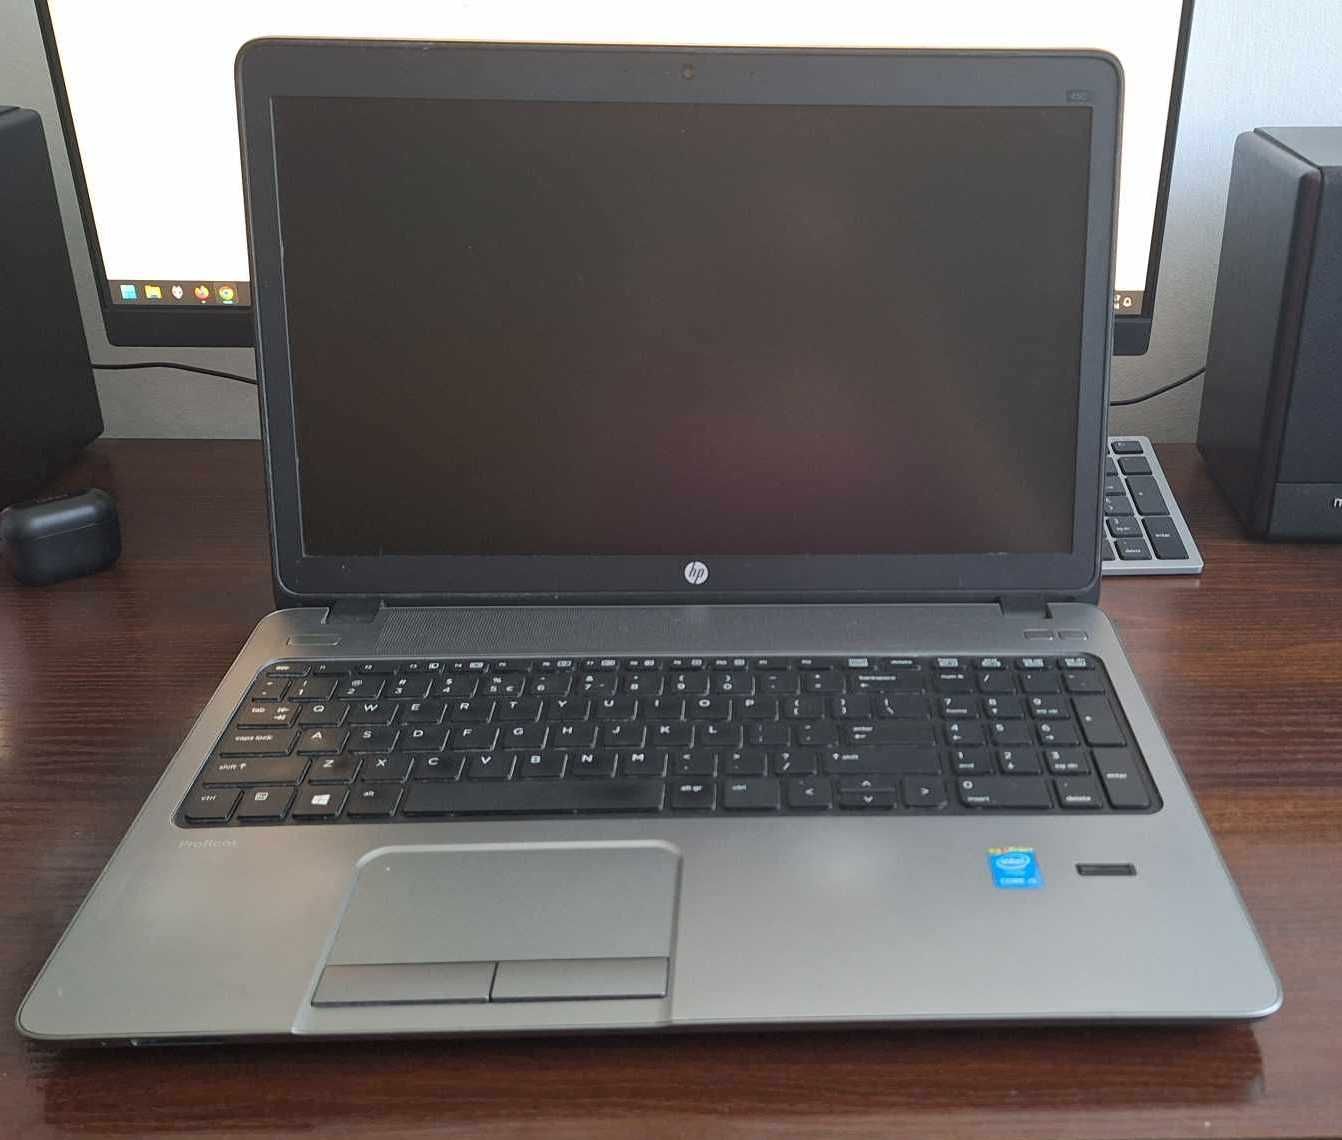 Laptop HP ProBook 450 G1, bez dysku, Intel Core i5-4200M, 8 GB RAM